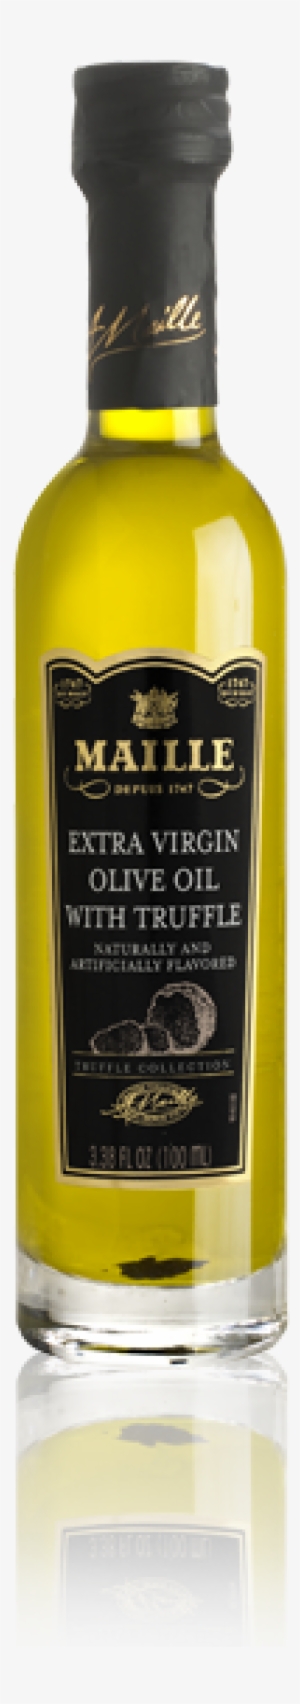 truffle olive oil